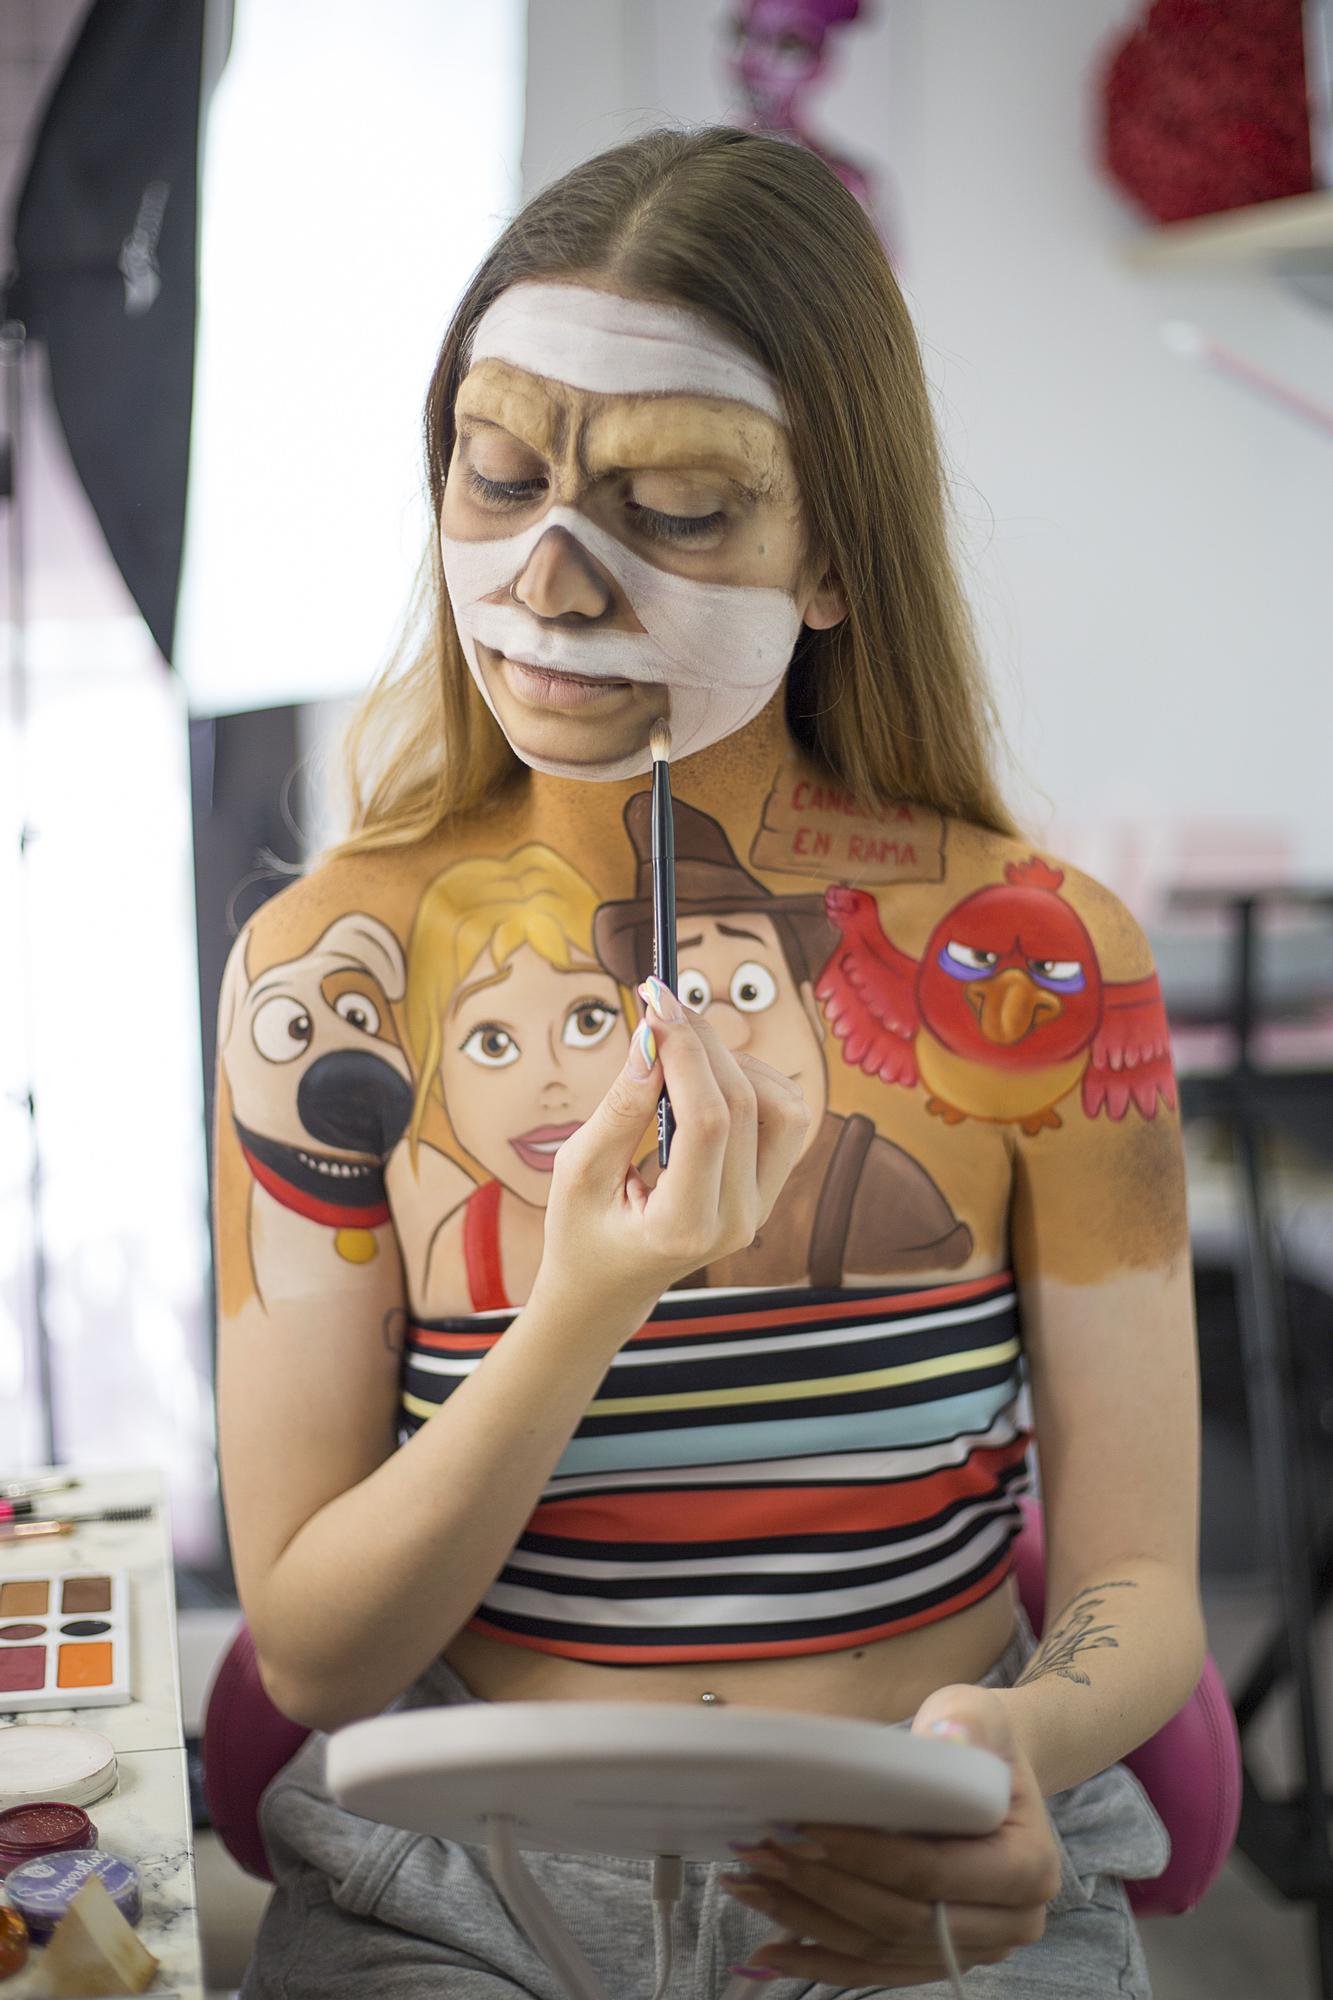 Cristina Pedroche desnuda en Nochevieja: ¿irá con body painting?